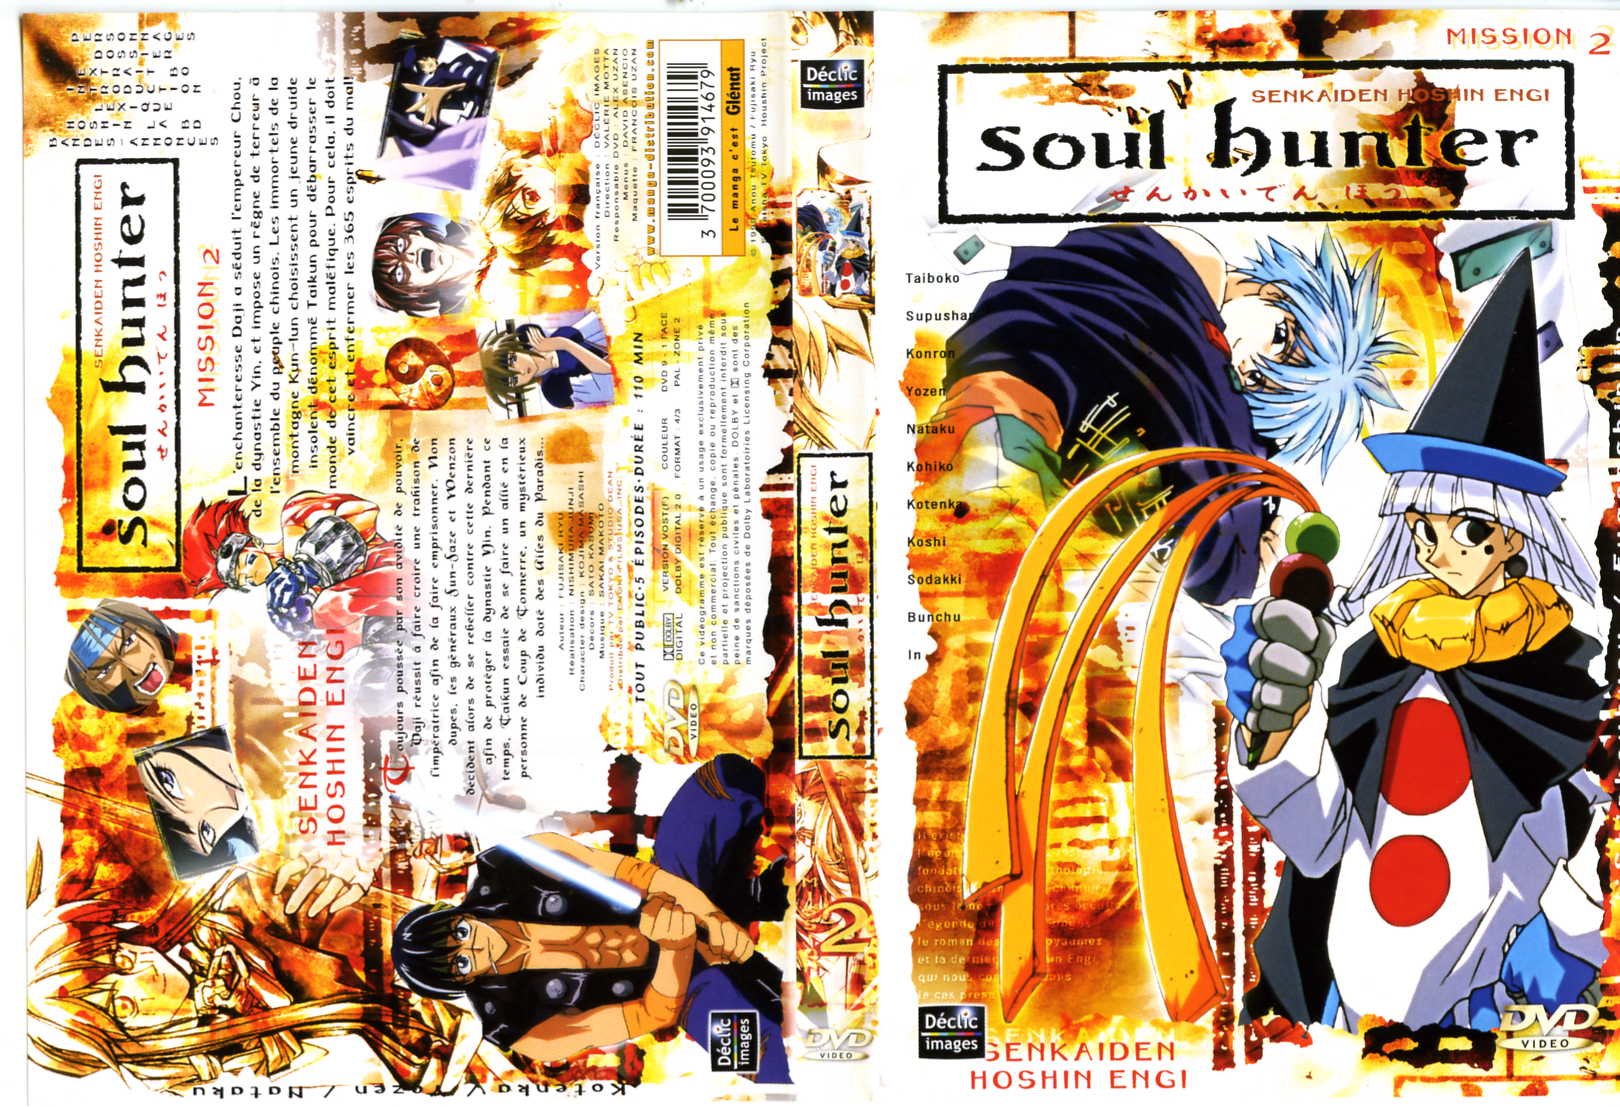 Jaquette DVD Soul hunter vol 2